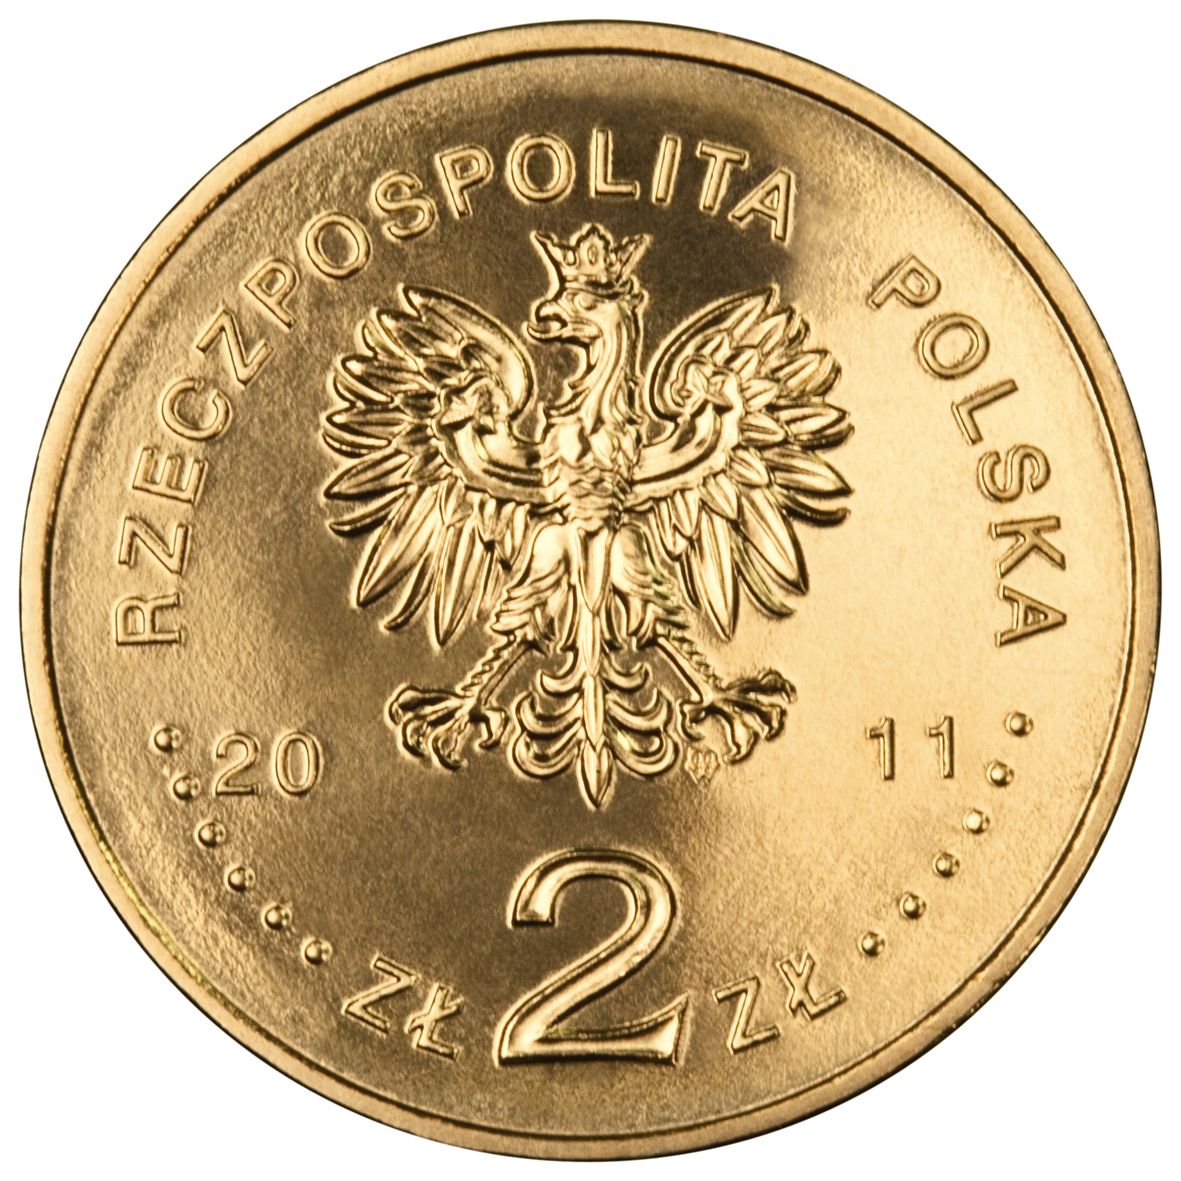 2zl-polonia-warszawa-awers-monety